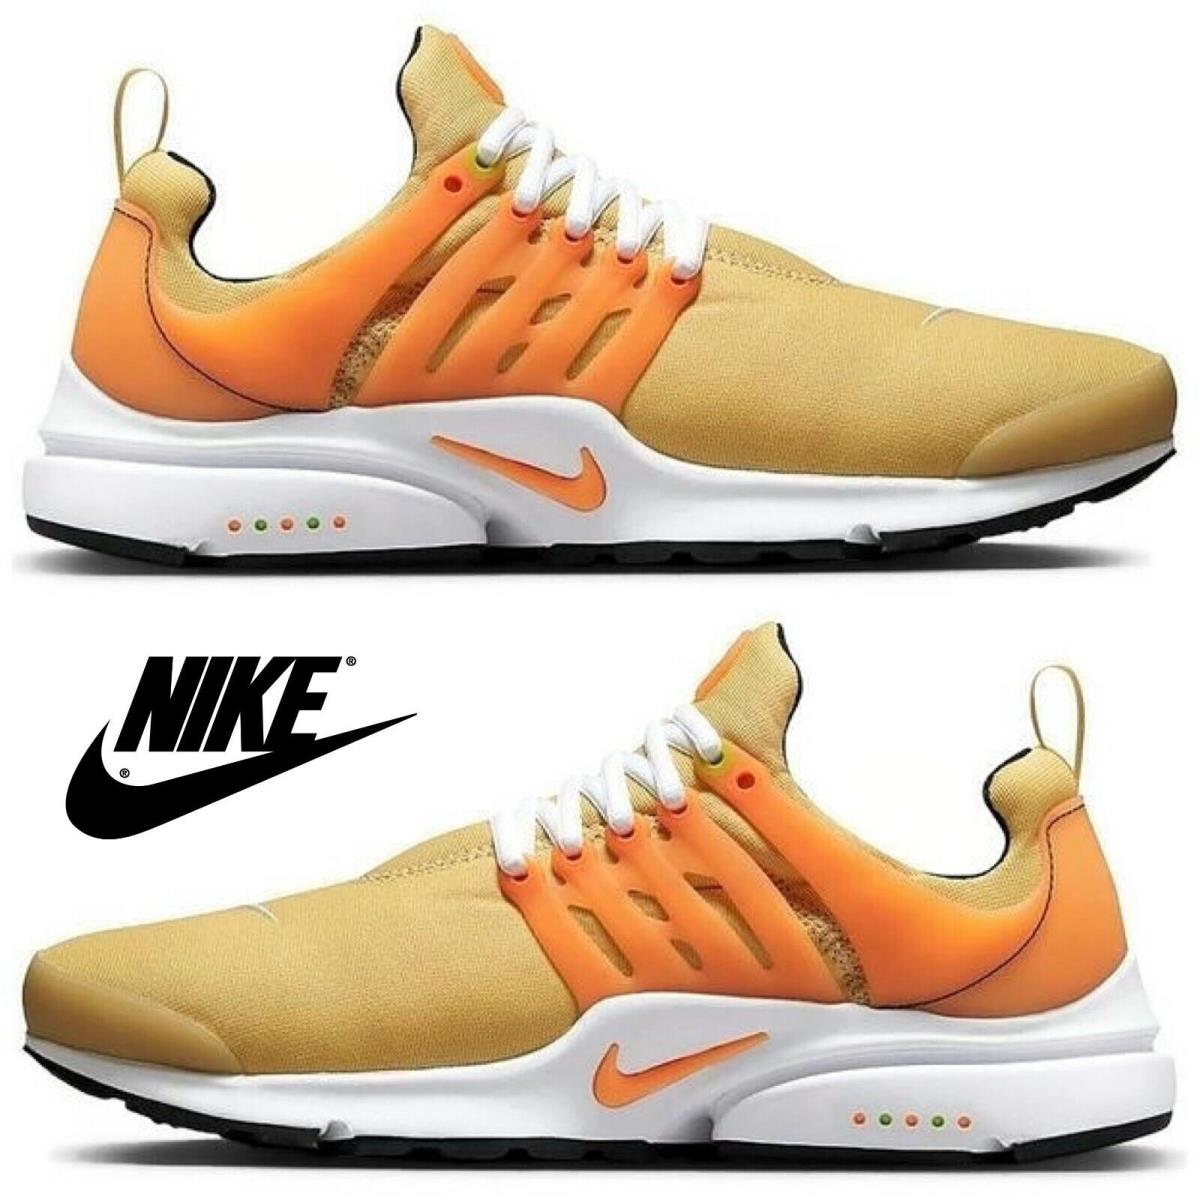 Nike Air Presto Running Sneakers Mens Athletic Comfort Casual Shoes Orange White